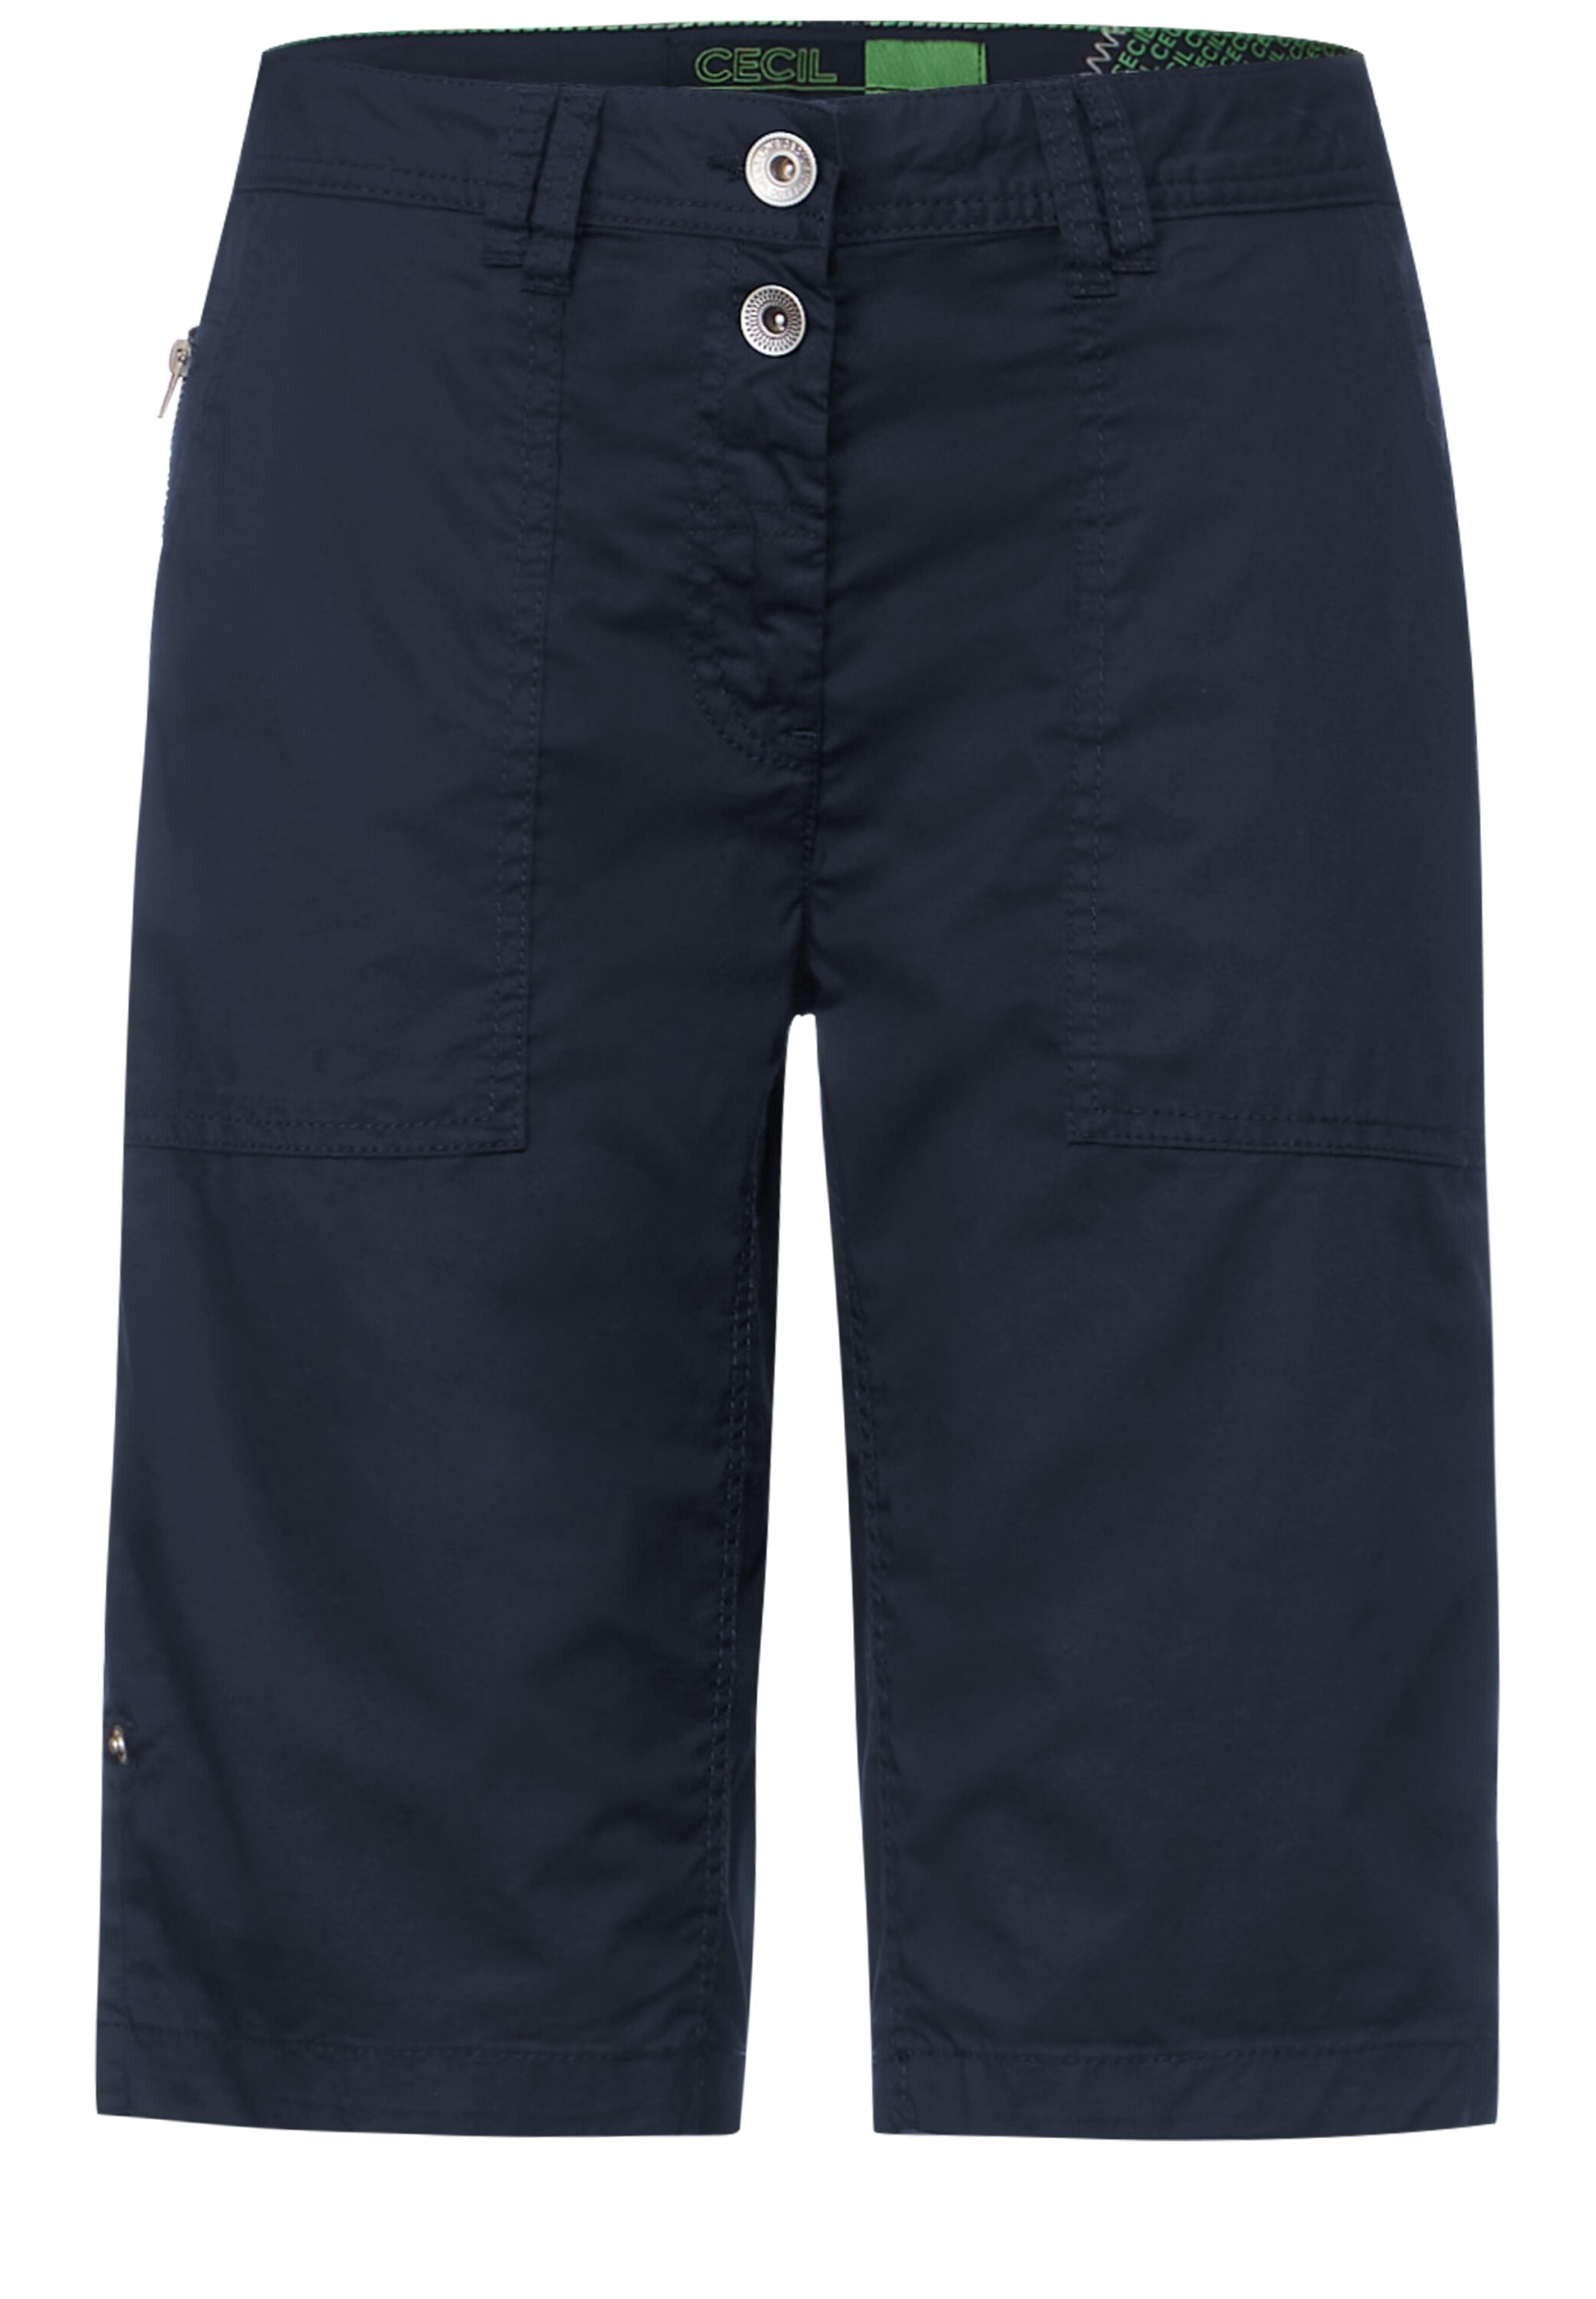 Style NOS New York Shorts blue | | deep | B376478-10128-33 33